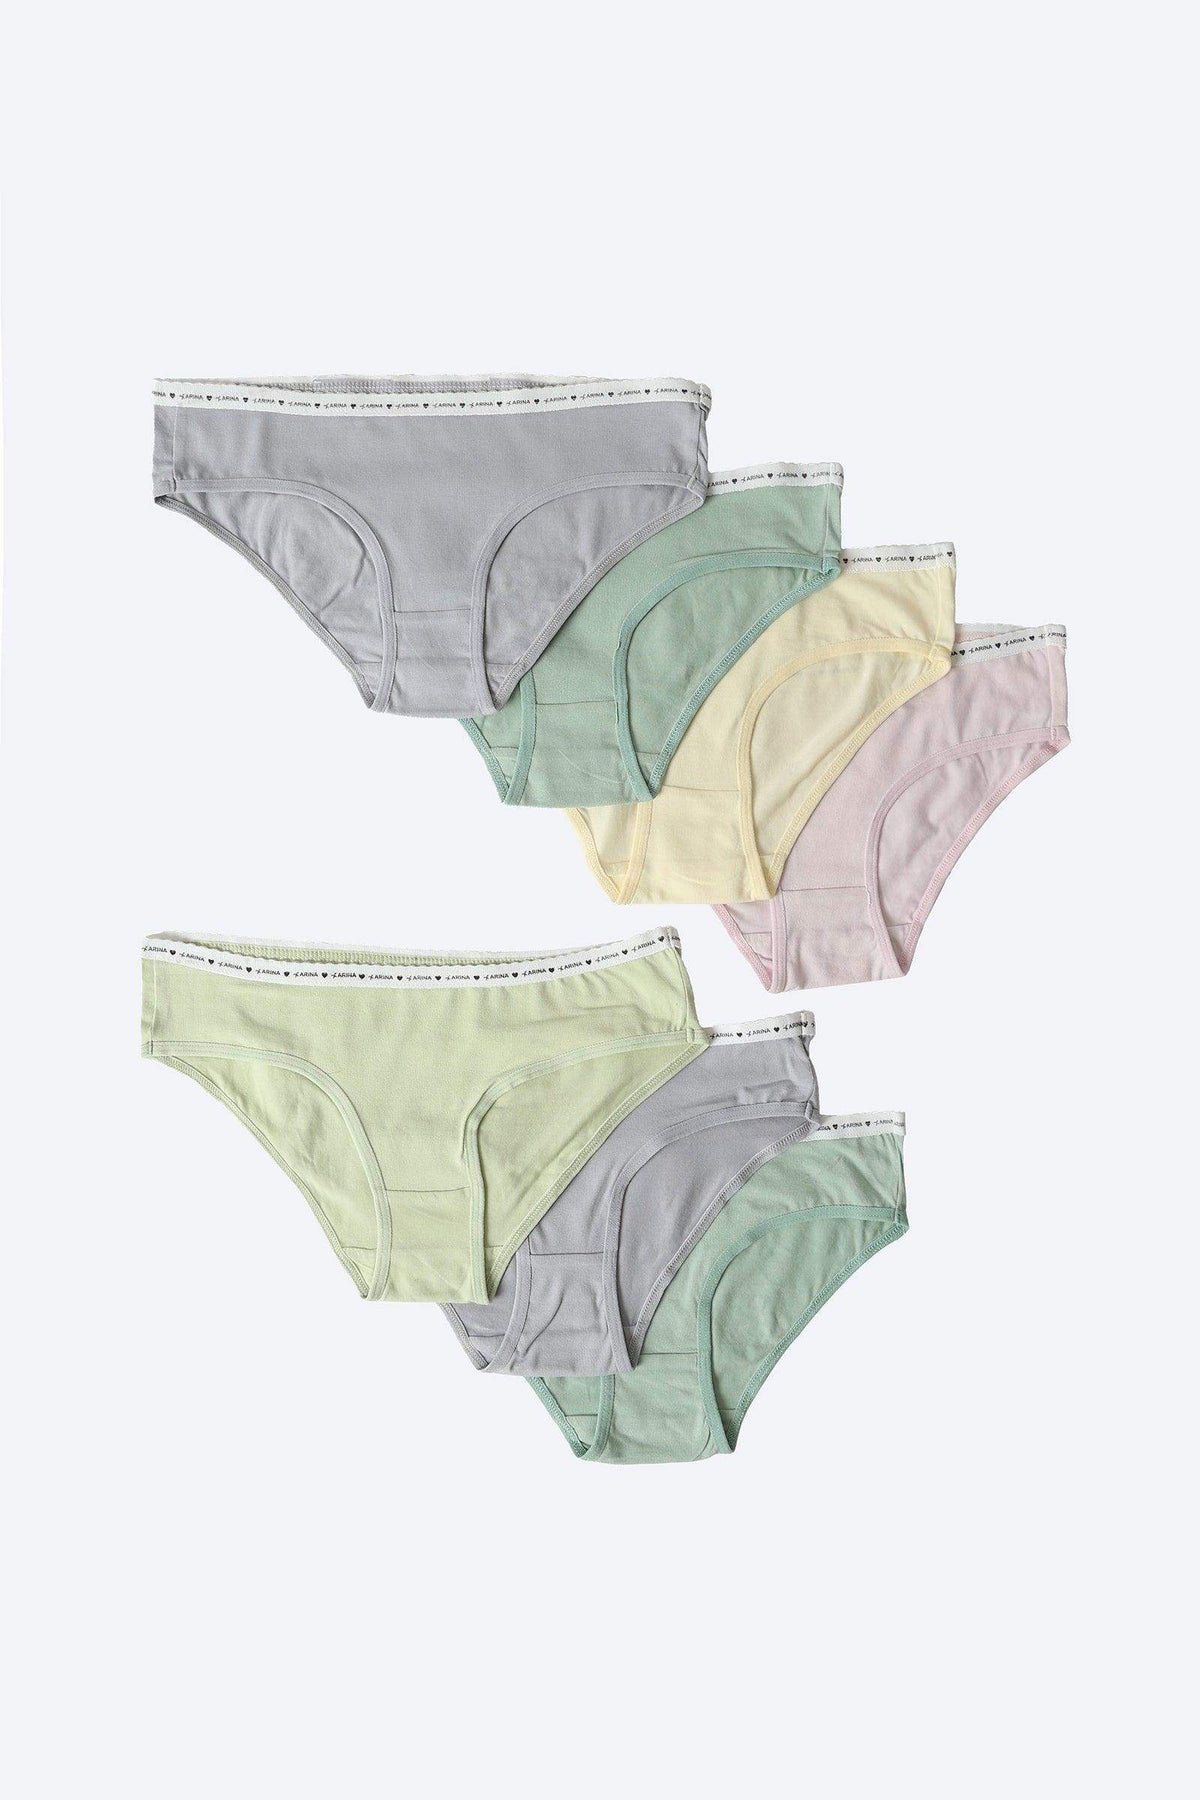 Ladies Panties Kavery plain (Outer Elastic) - 1 Pcs Pack